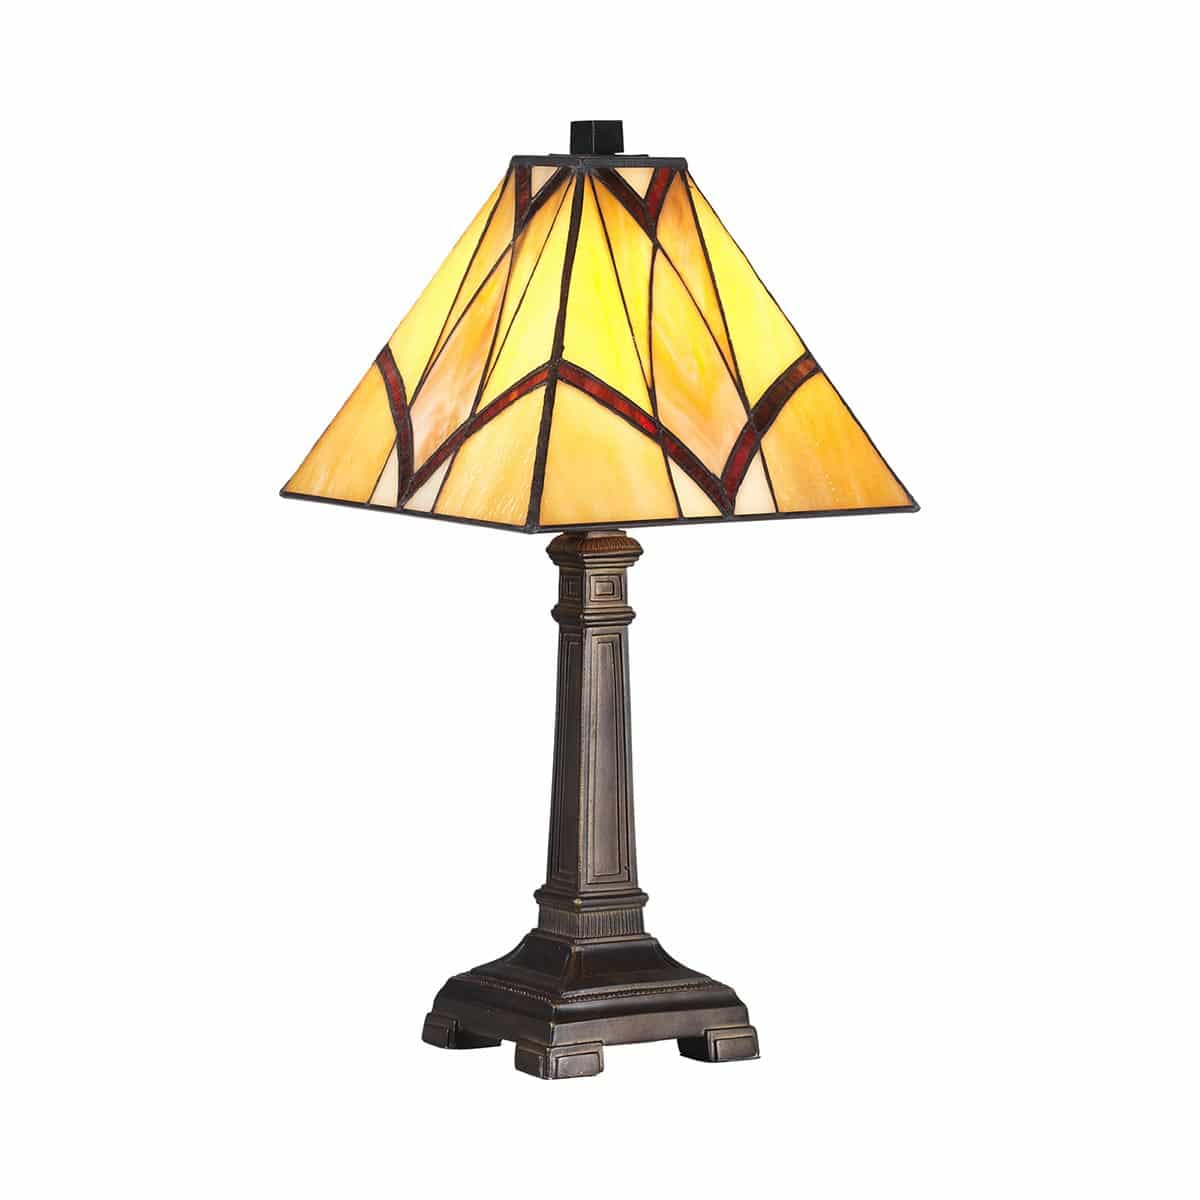 Portia Small Art Nouveau Tiffany Table Lamp Amber / Red